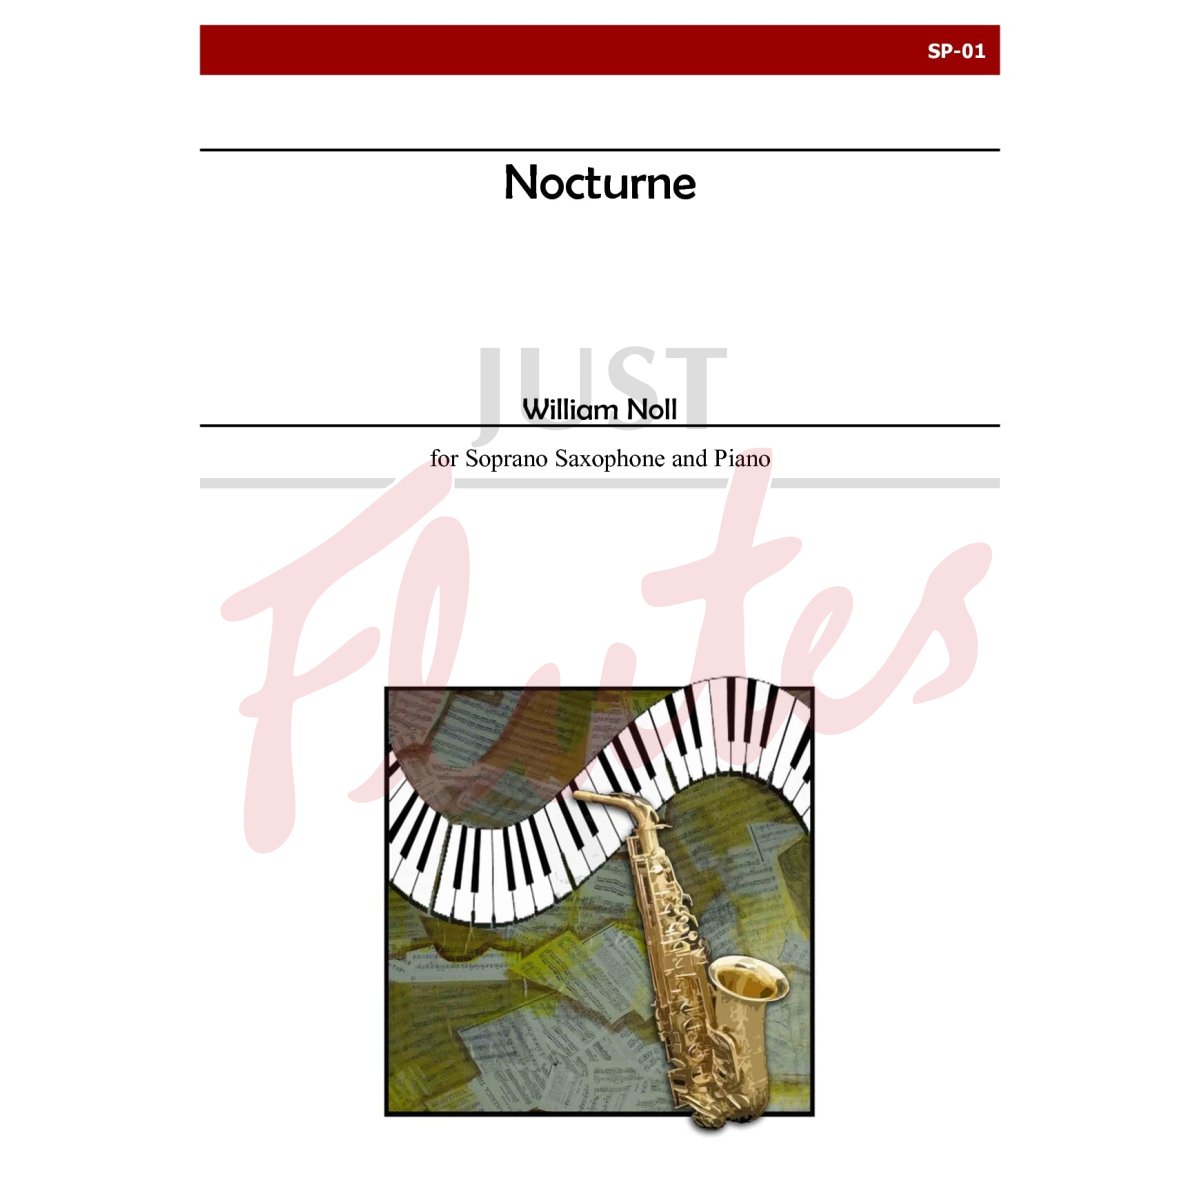 Nocturne for Soprano Saxophone and Piano